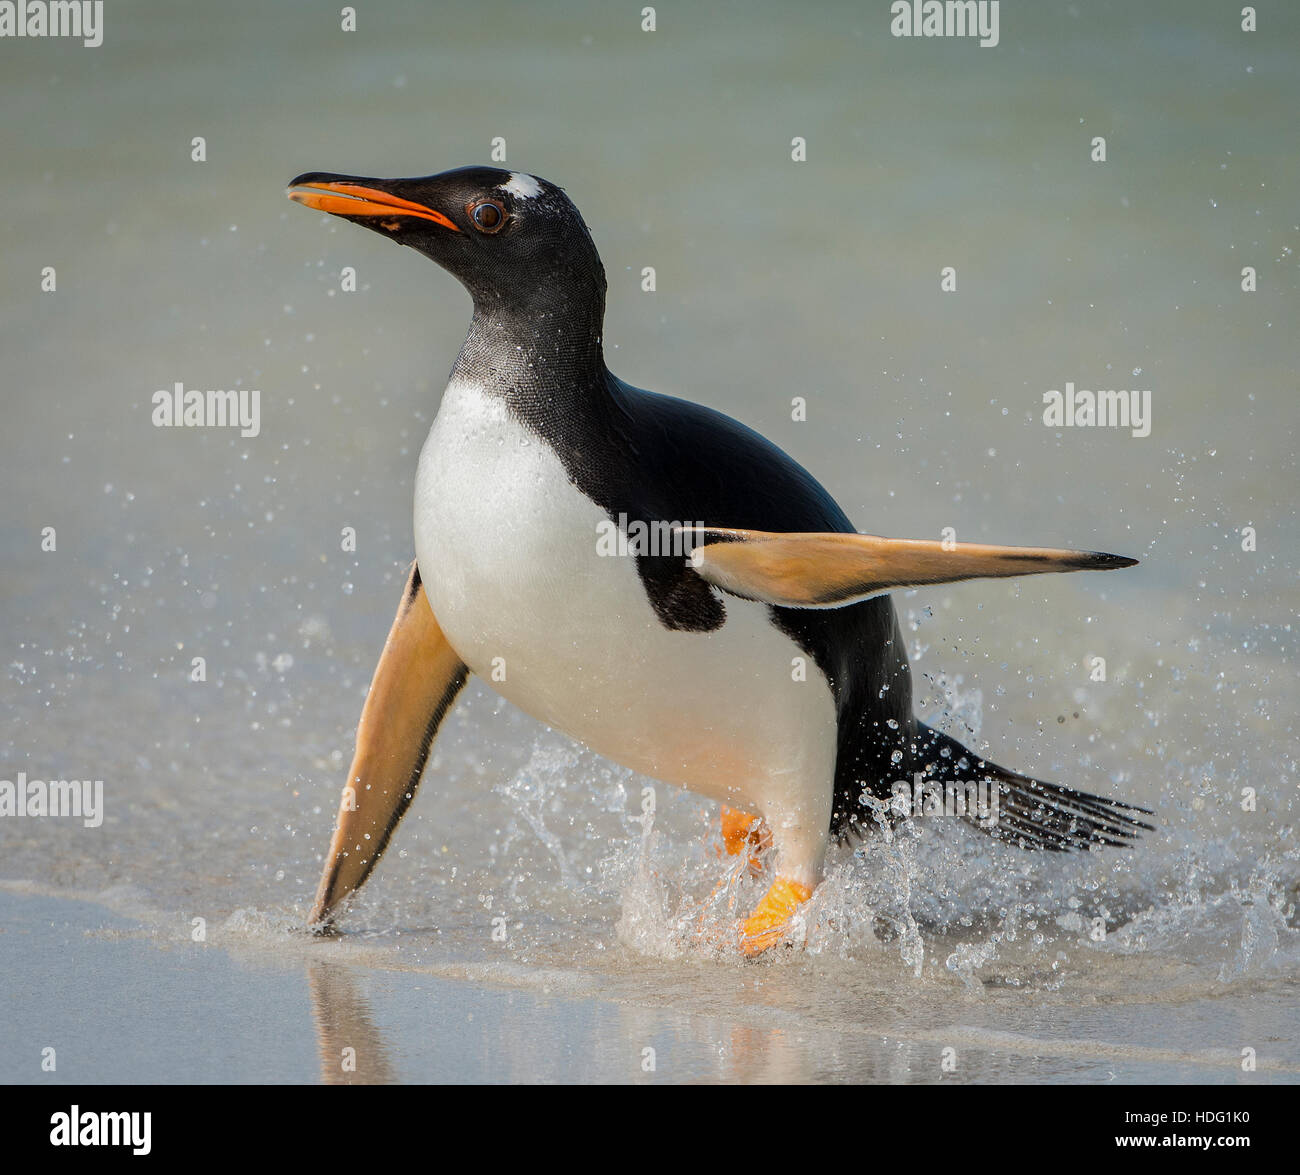 Pinguino Gentoo (Pygoscelis papua) emergente dal mare Nikon D4, Nikon 80-400 lente @400mm, ISO 1000, f5.6, Foto Stock